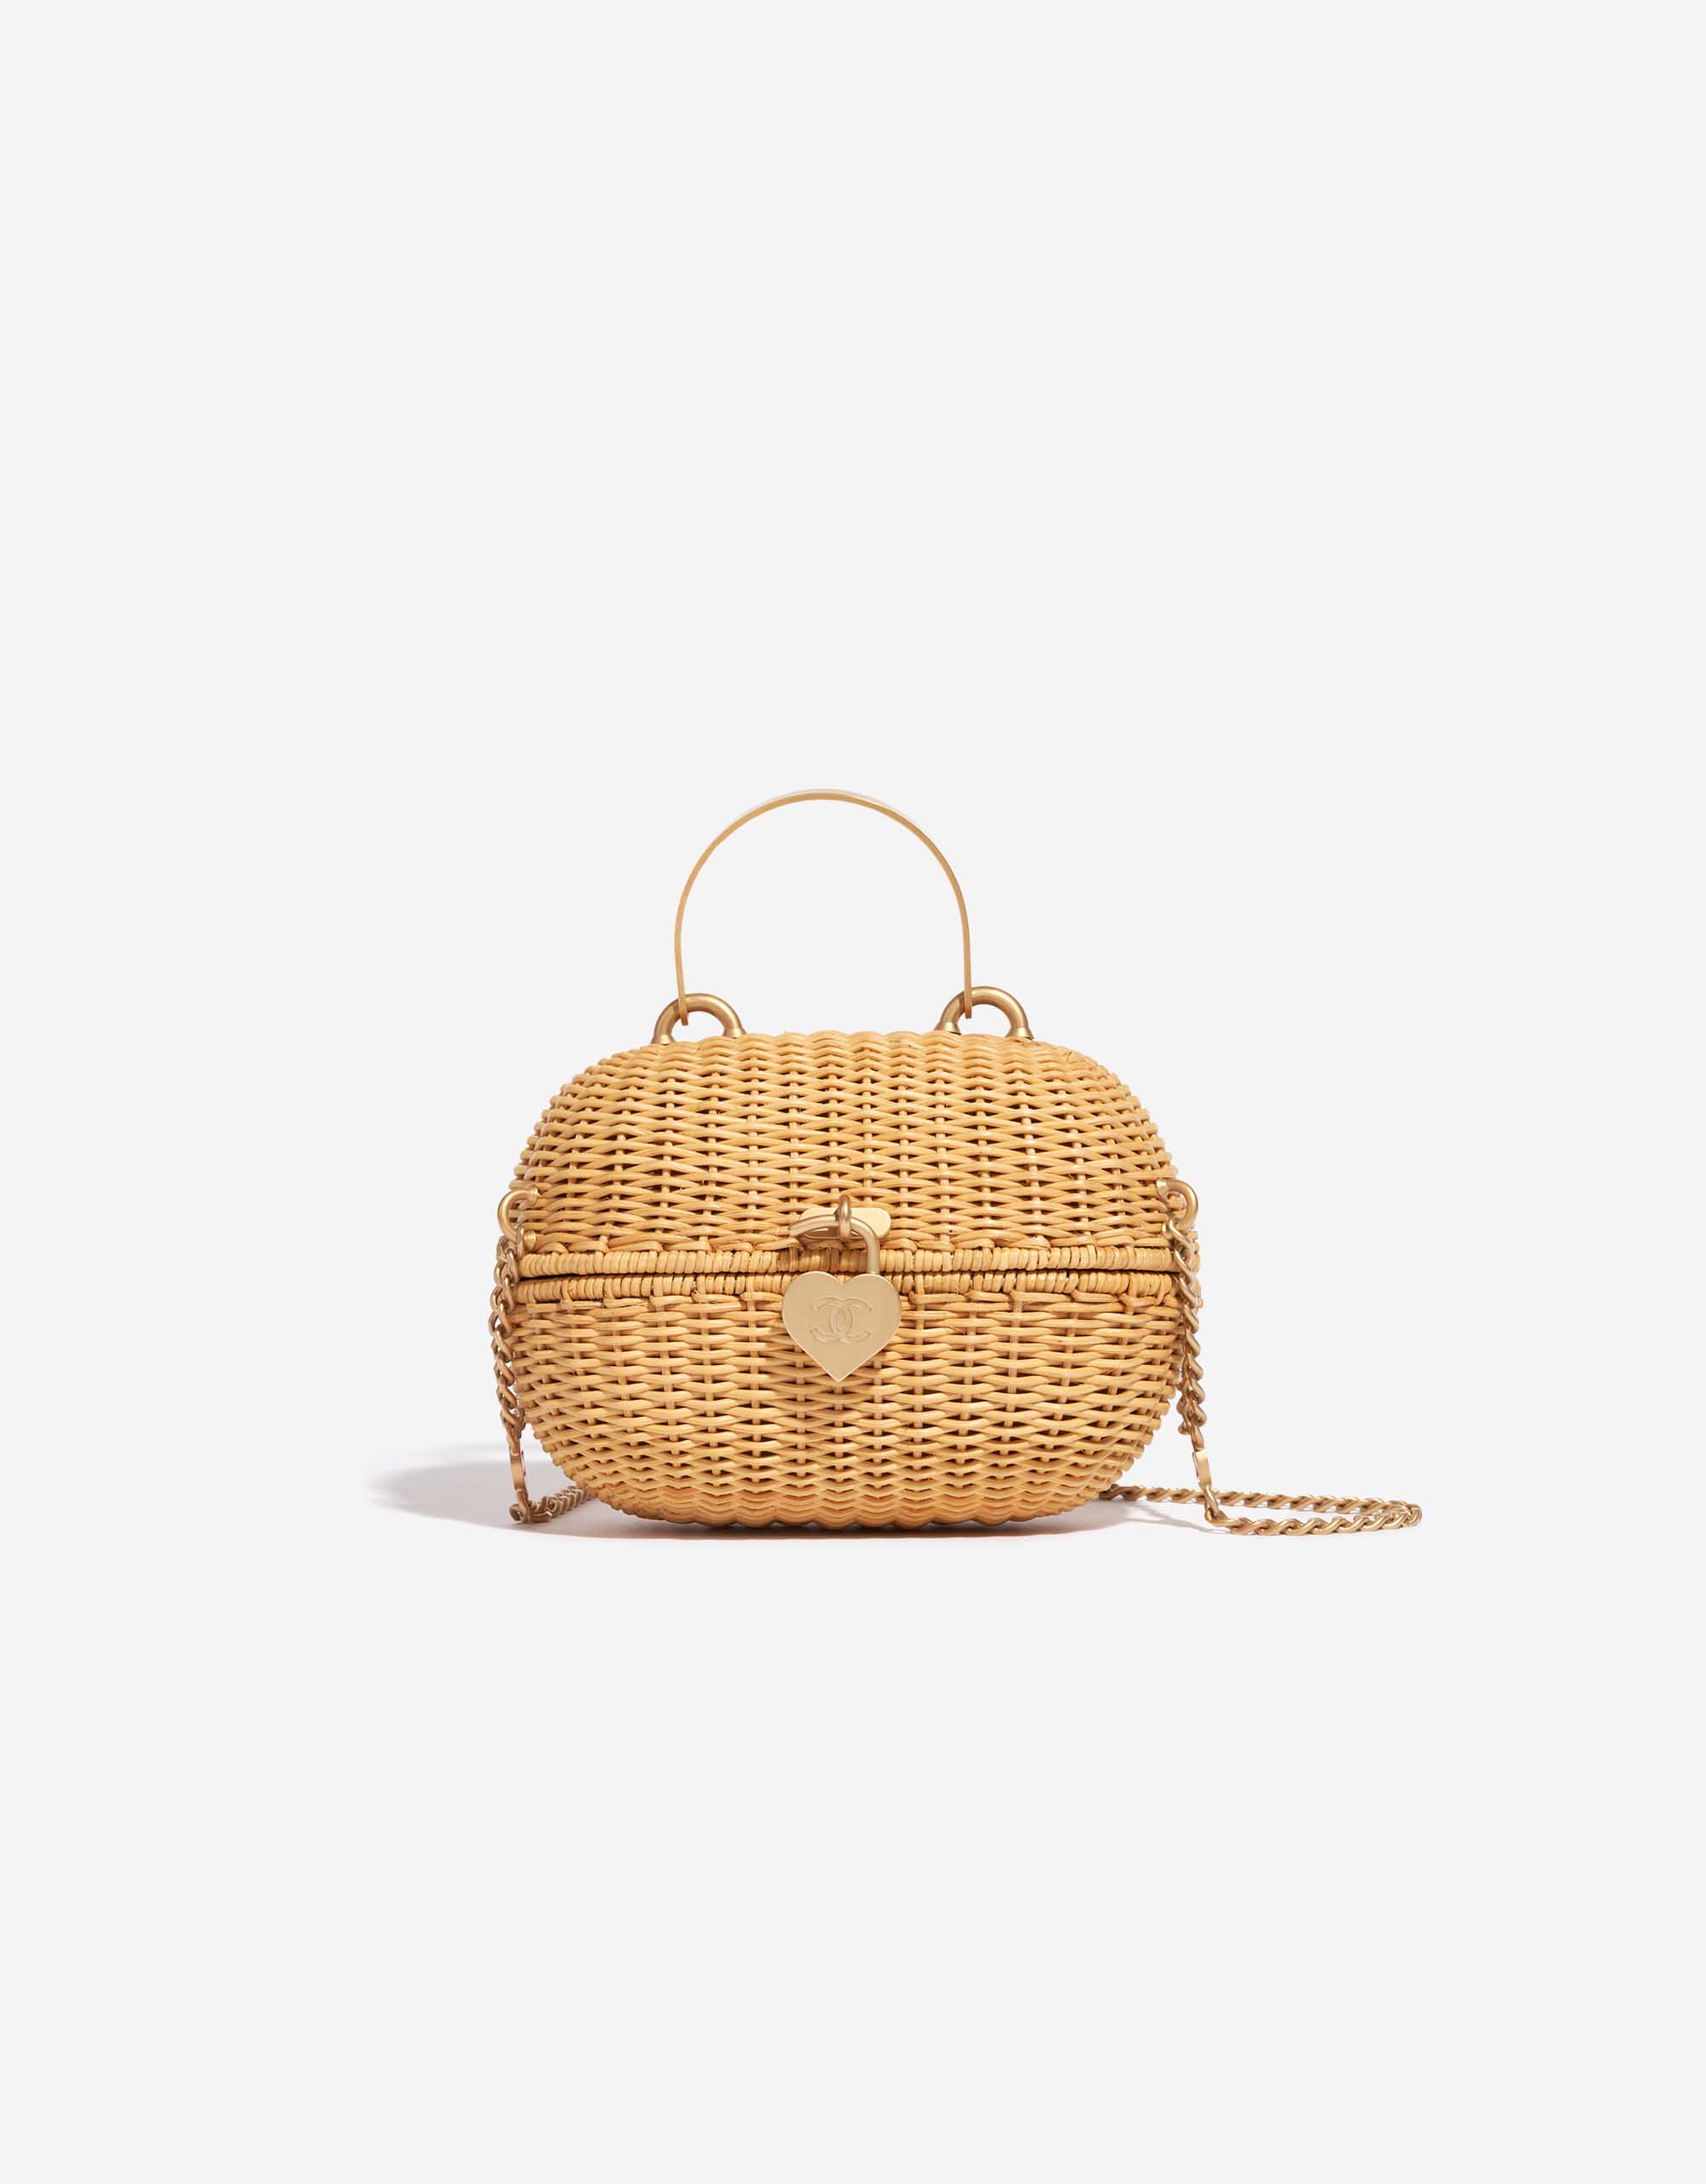 Chanel Love Basket Wicker Beige | SACLÀB